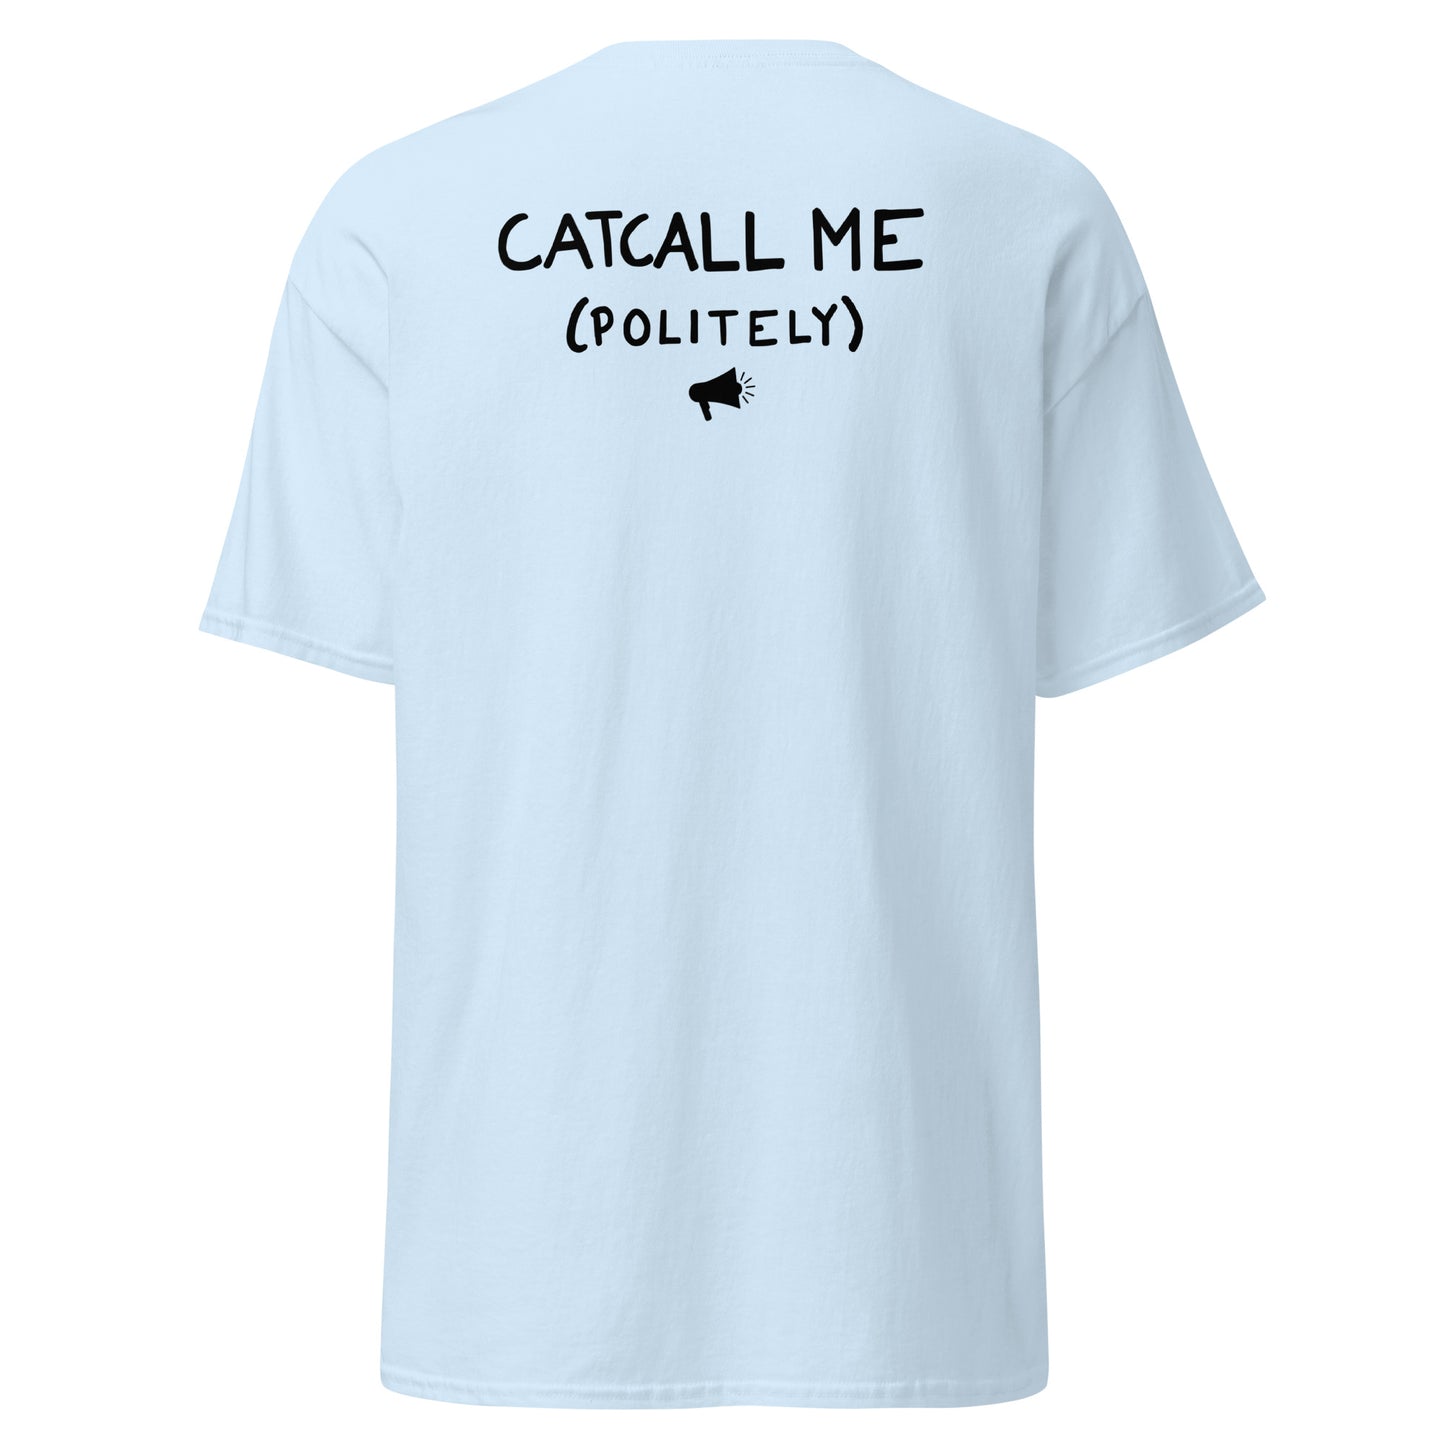 catcall me t-shirt